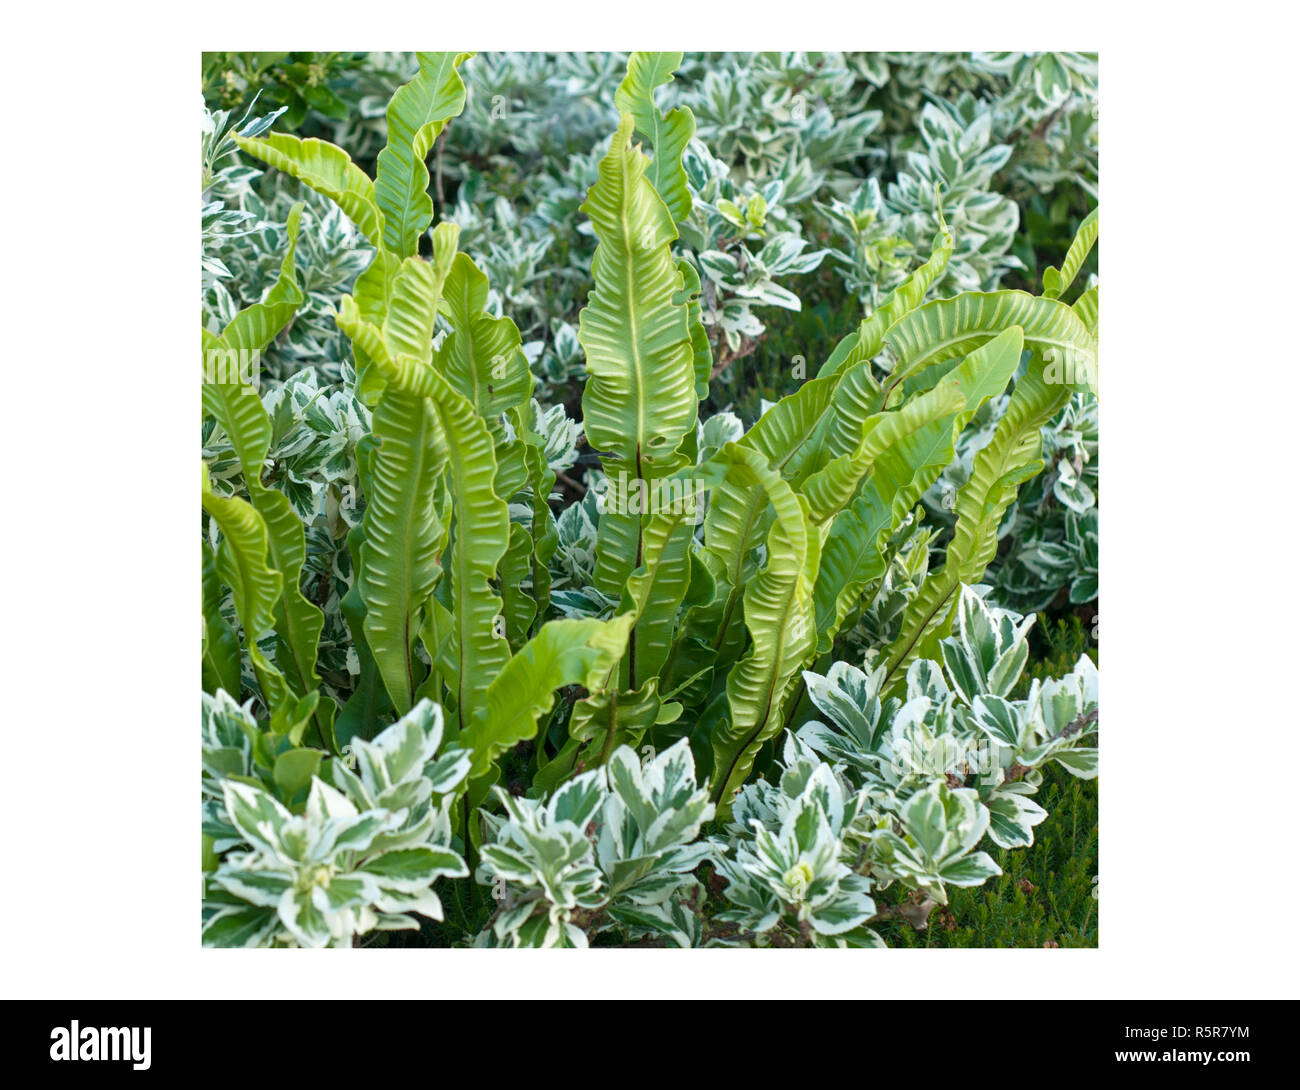 A beutiful combinatio of Hart's-tongue fern (Asplenium scolopendrium) and Parennials shrub in a squaric format Stock Photo